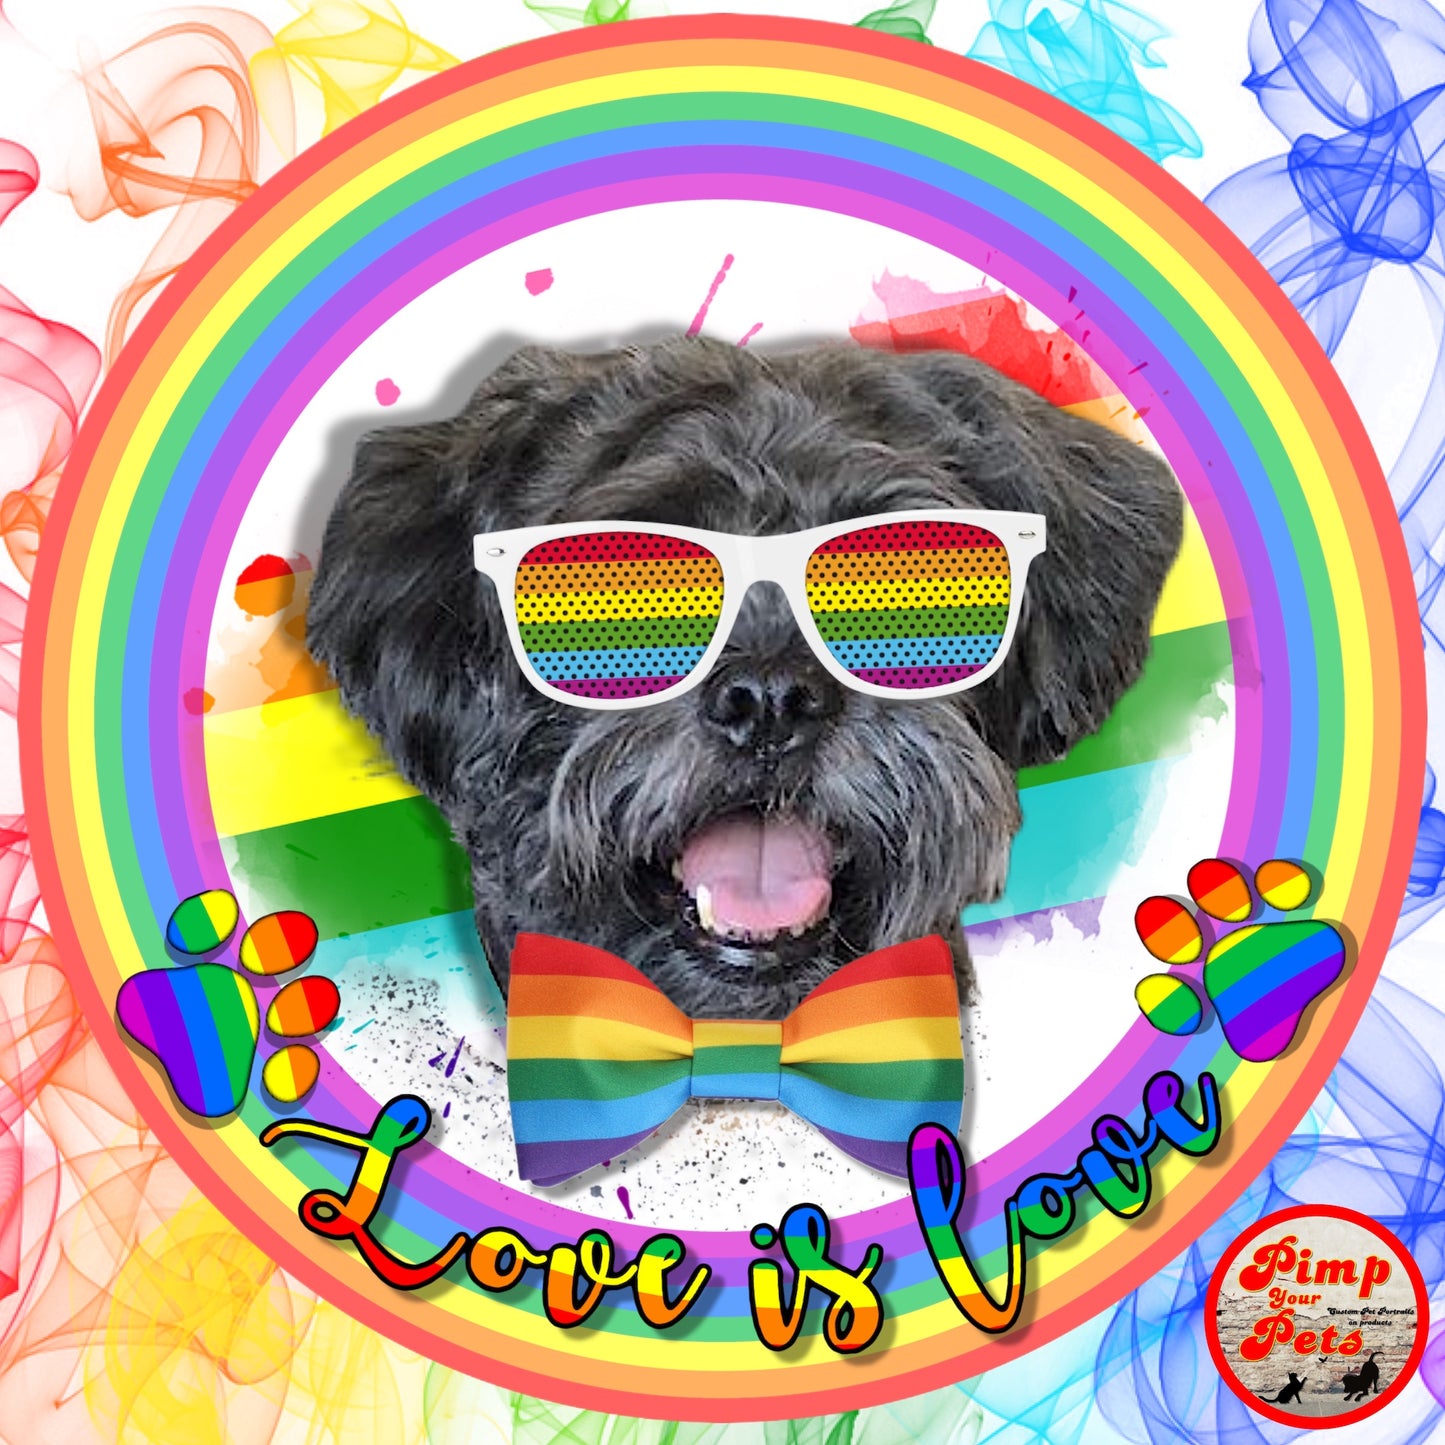 Pride Love is Love Profile Picture for Instagram